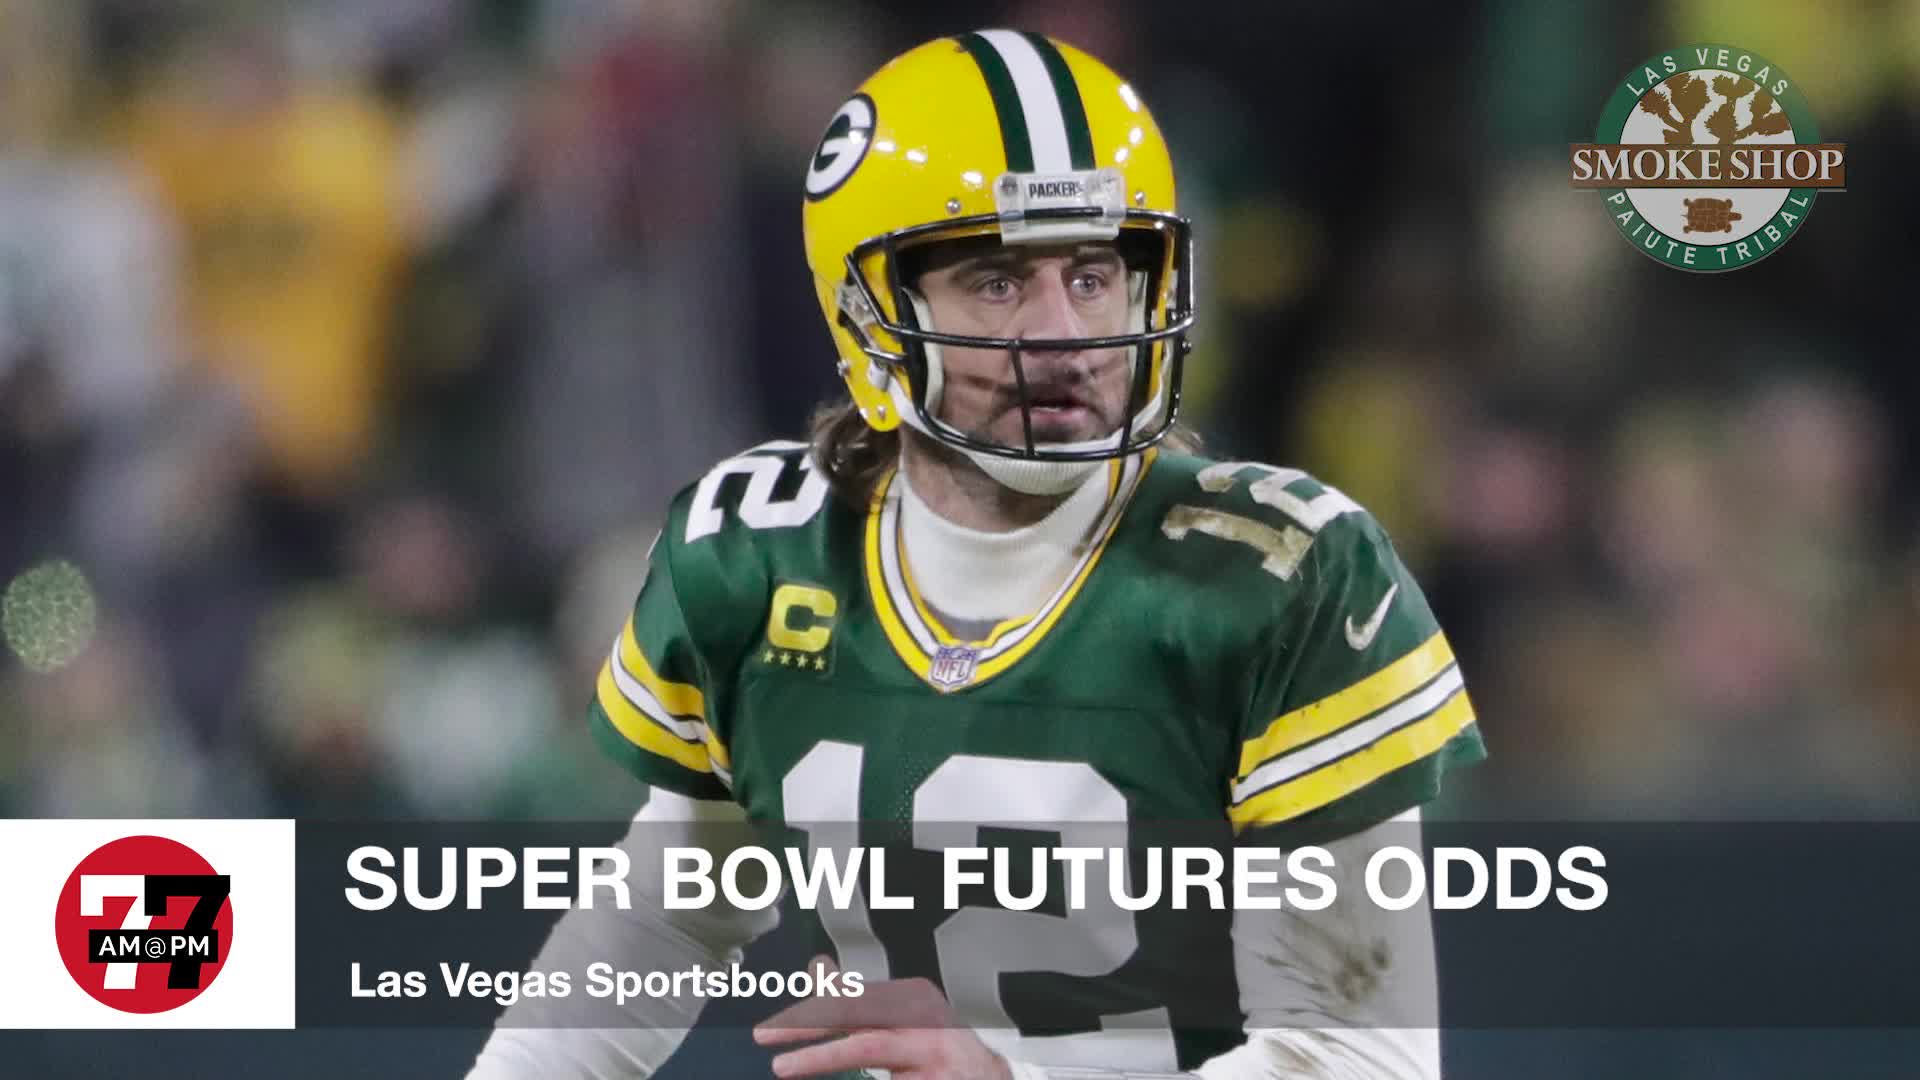 7@7PM Super Bowl Futures Odds